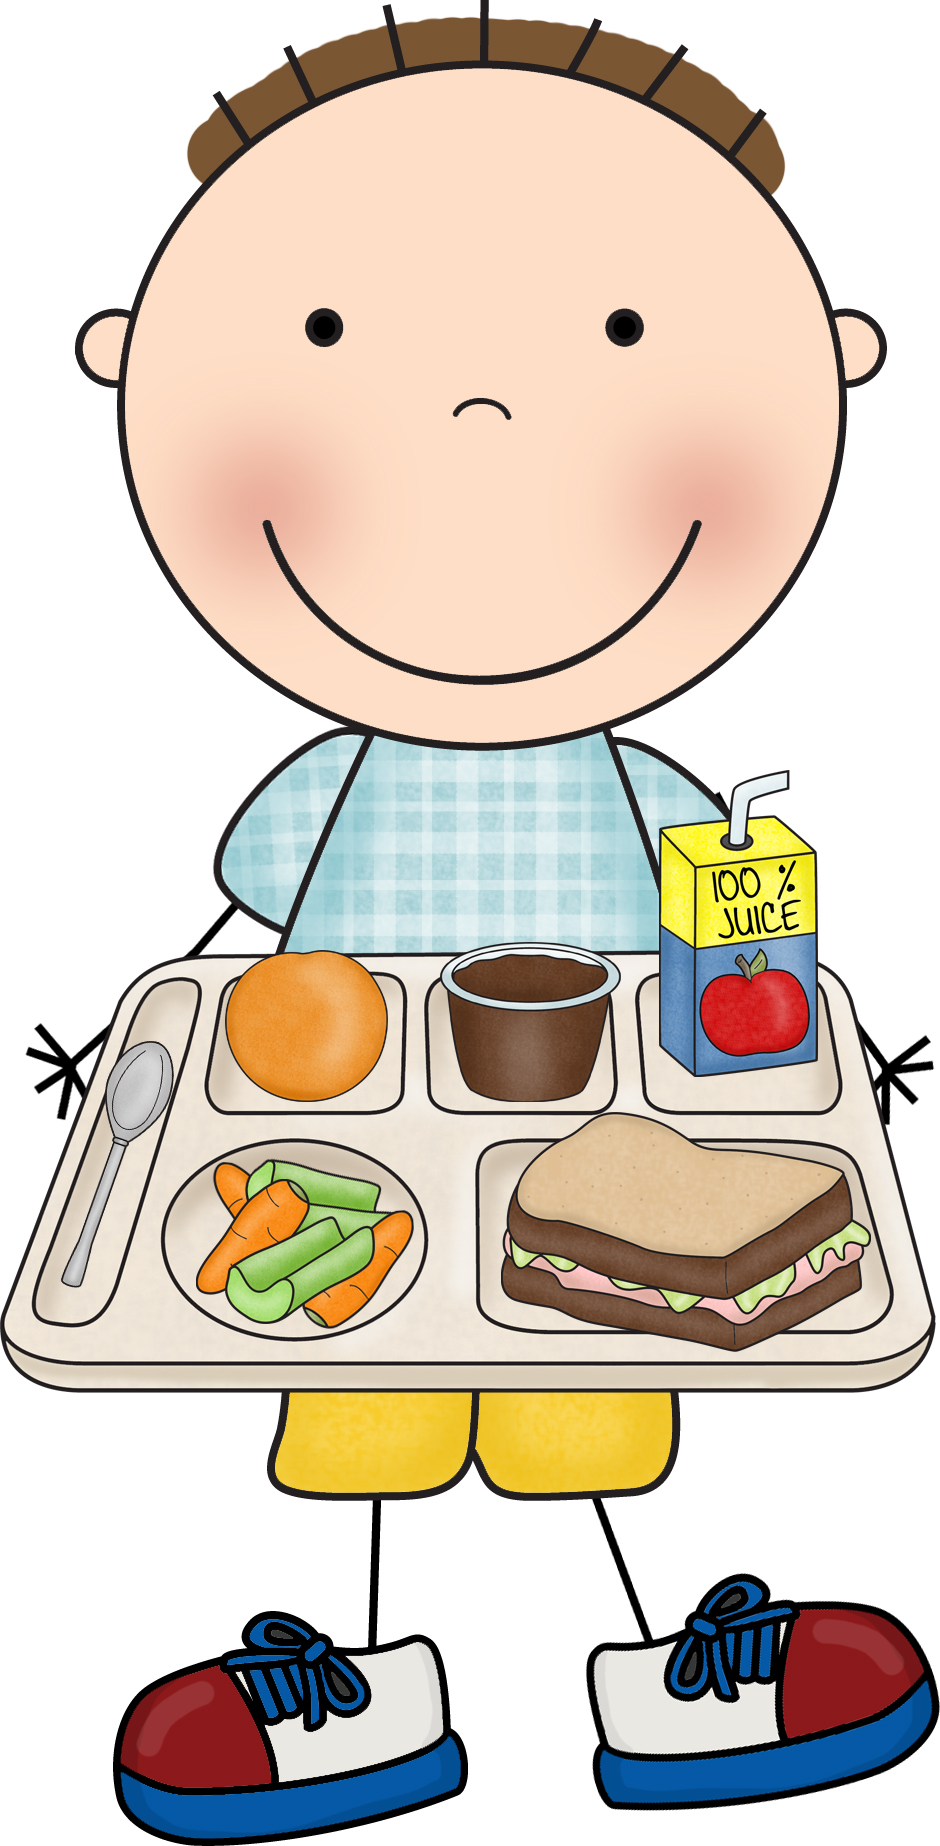 School lunch tray clipart - ClipartFox